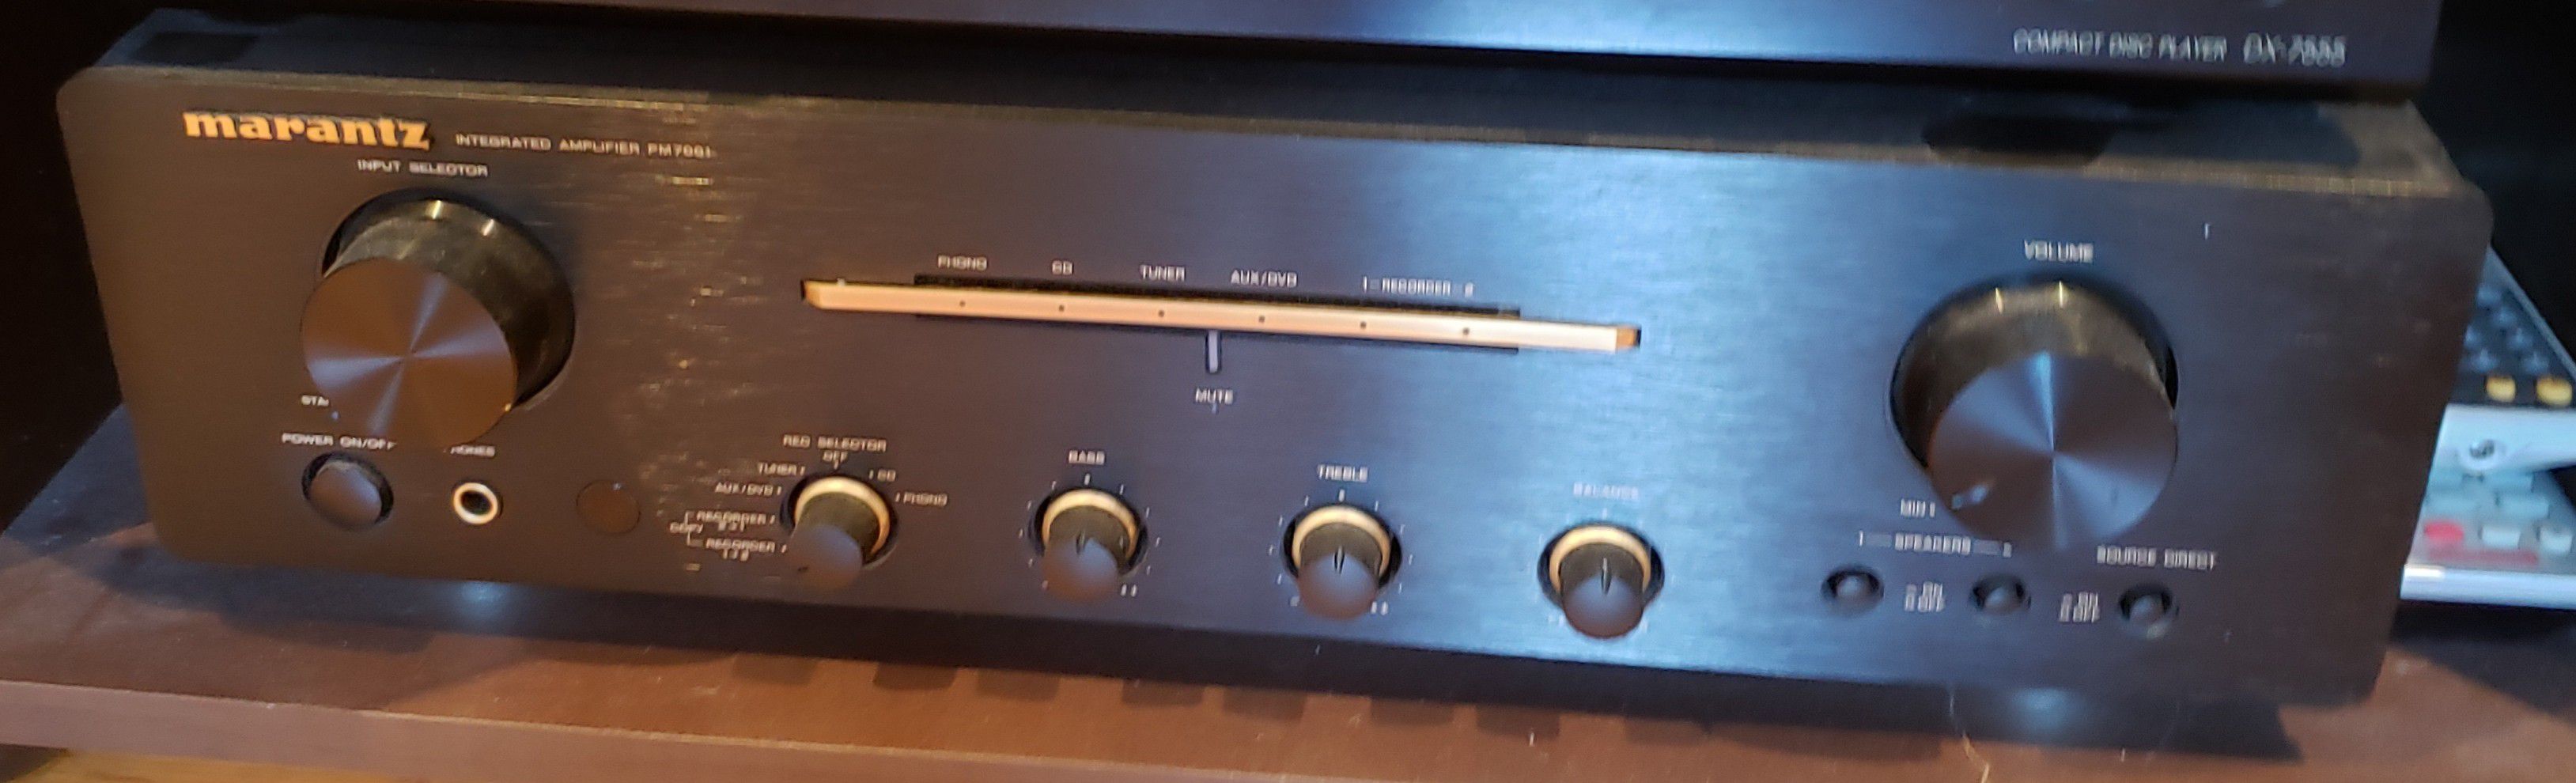 Marantz stereo amplifier